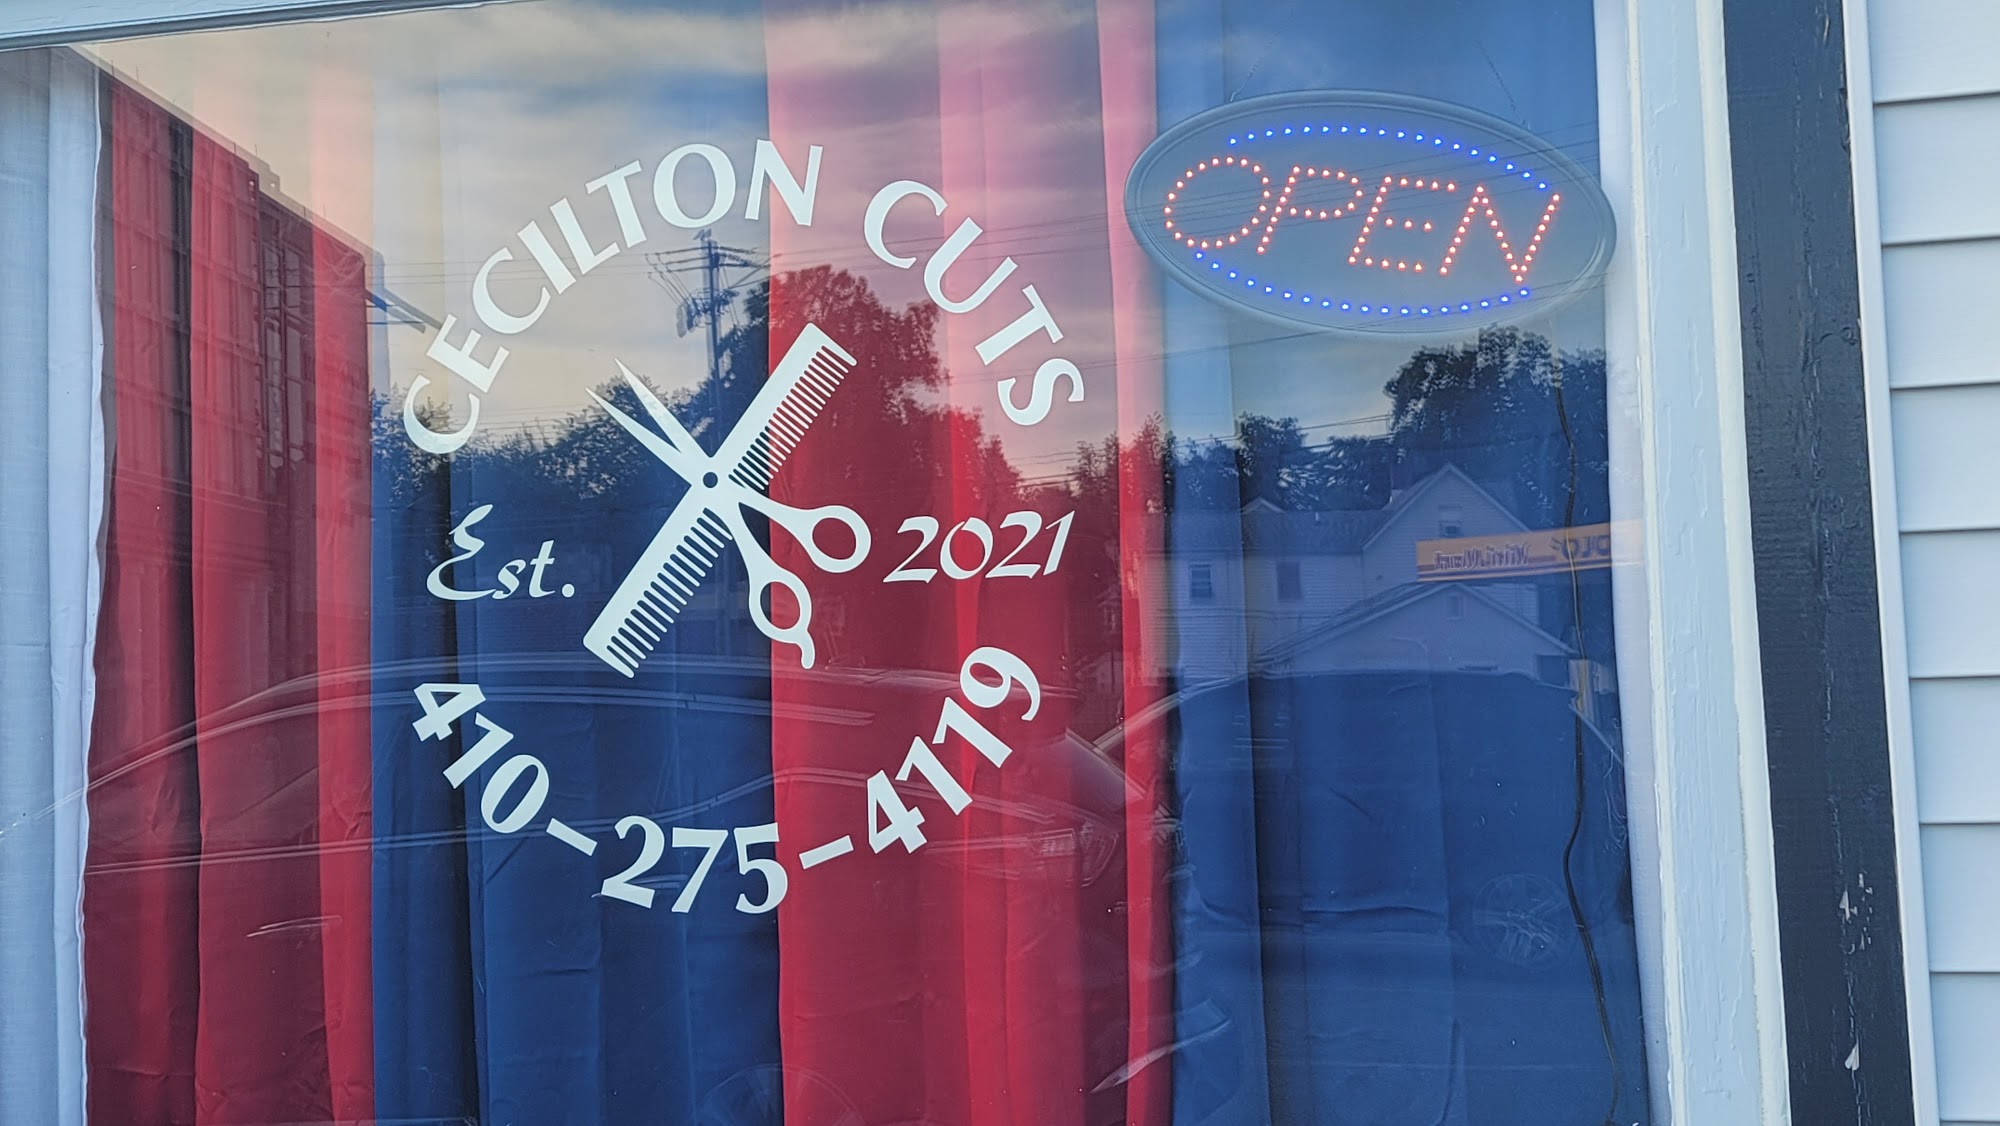 Cecilton Cuts 121 S Bohemia Ave, Cecilton Maryland 21913